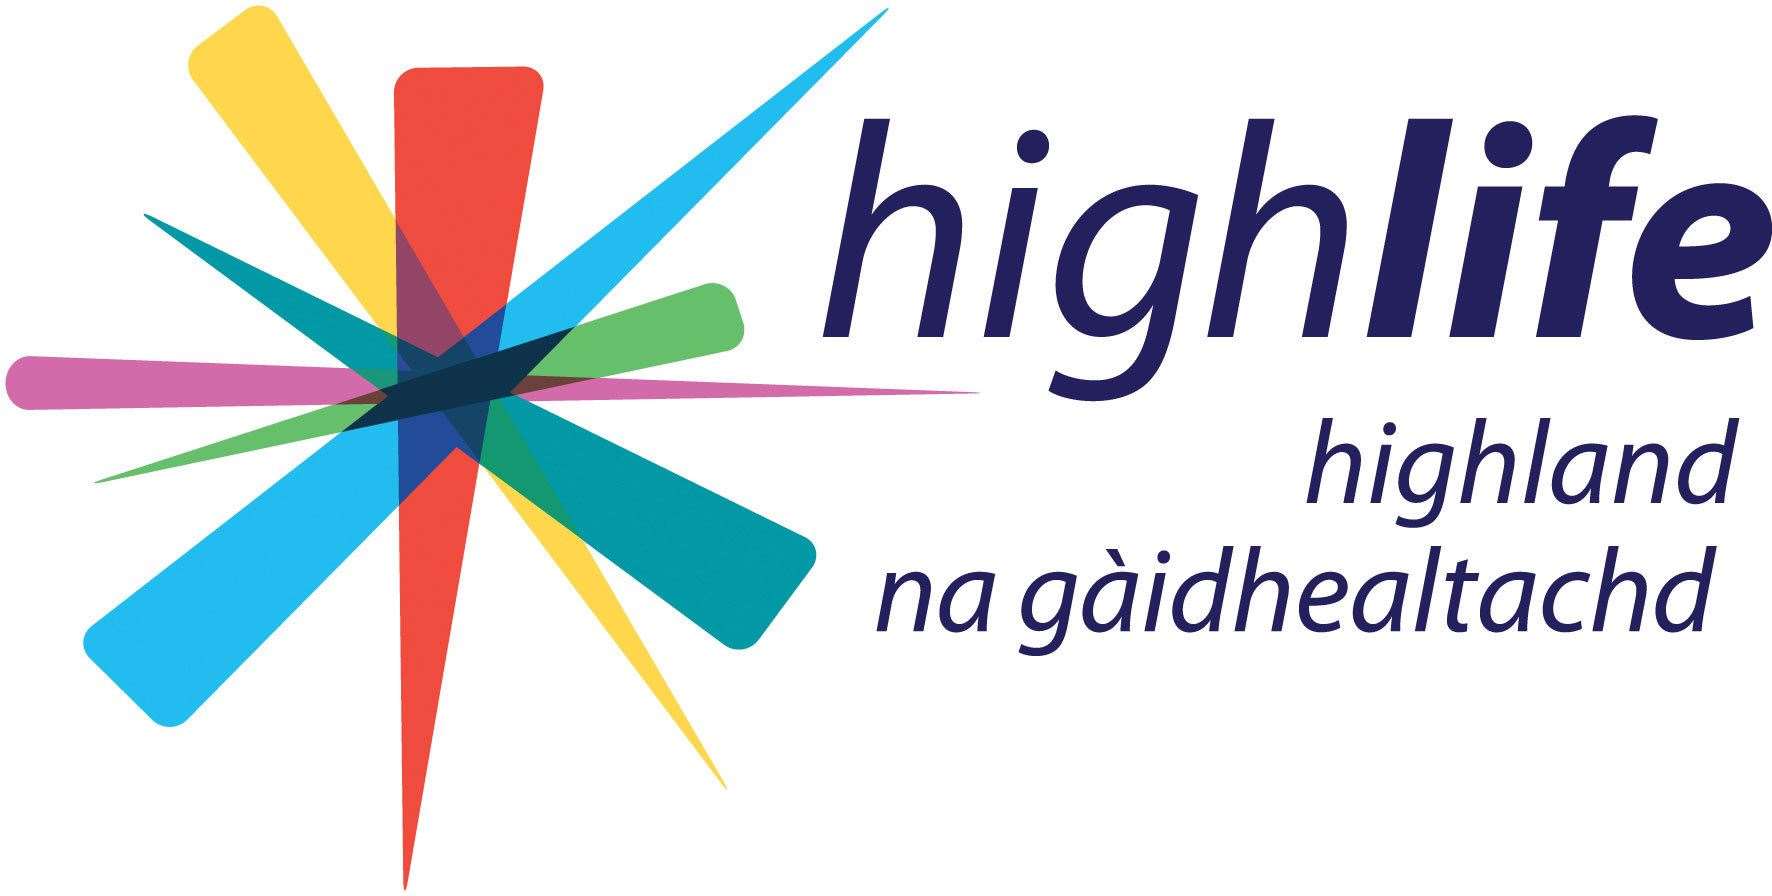 High Life Highland logo.